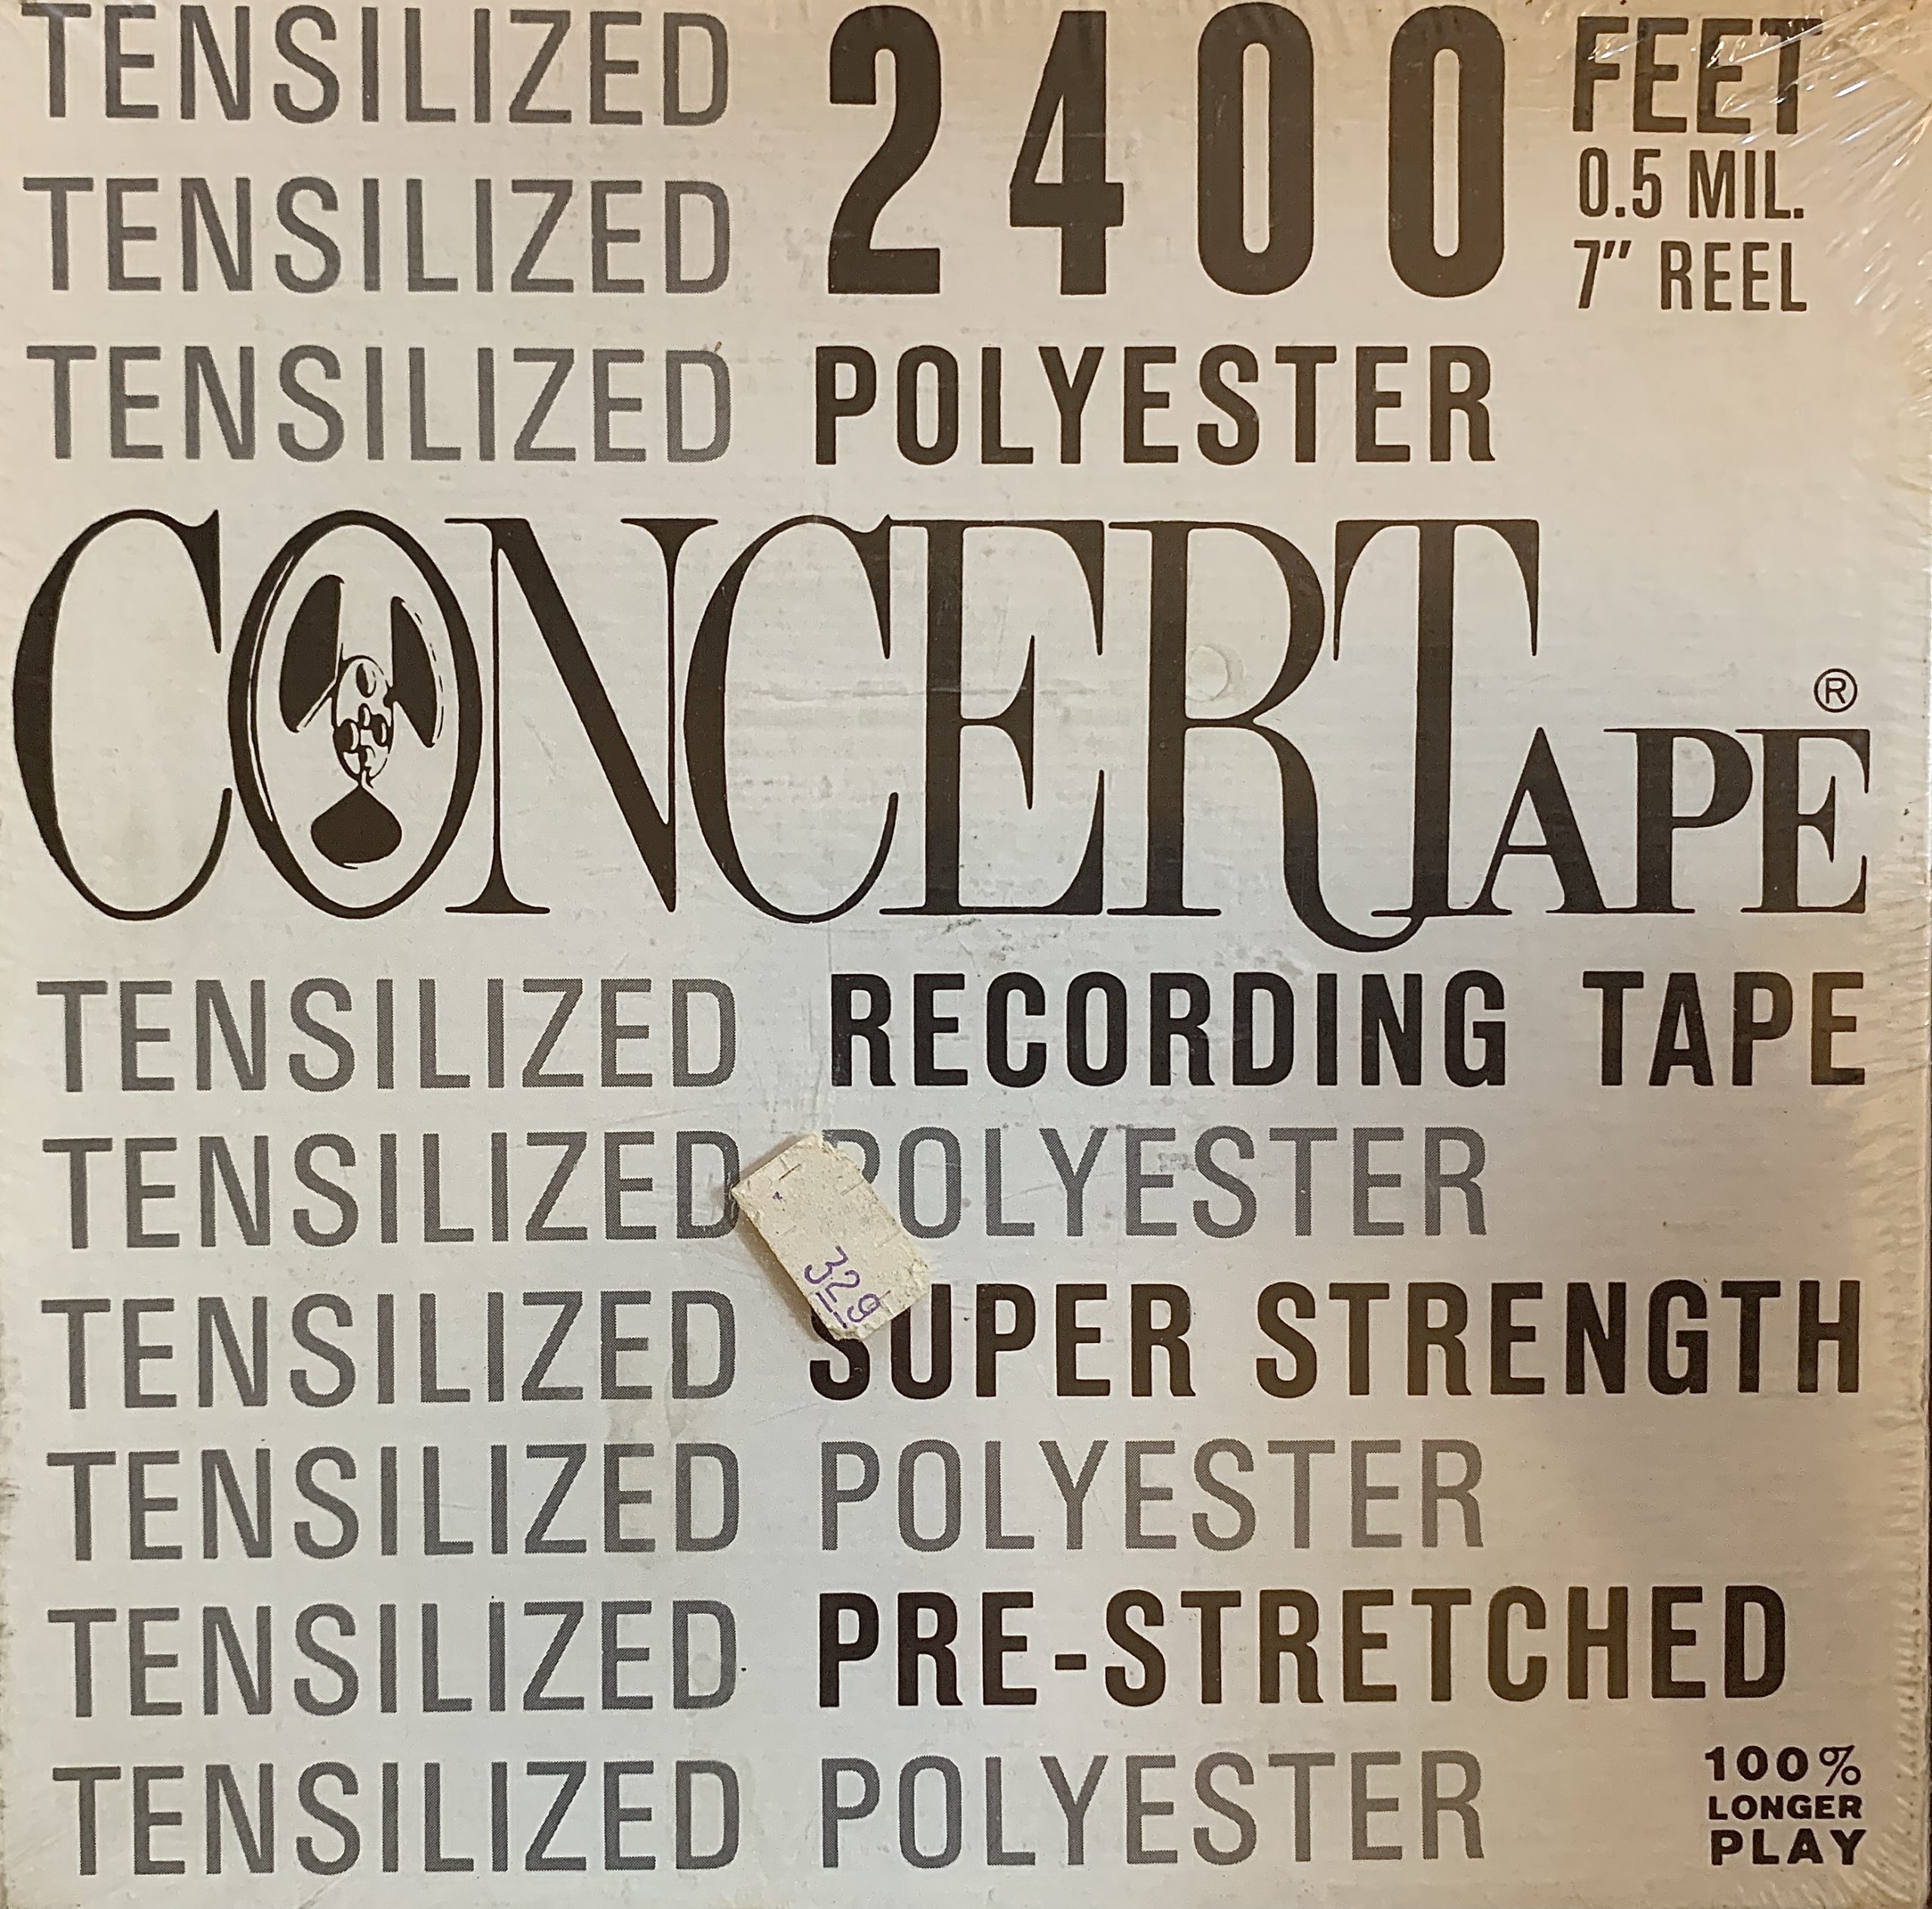 Audiotape / Capitol High Performance Tape 1862, LP, 7″ Reel, 1800 ft